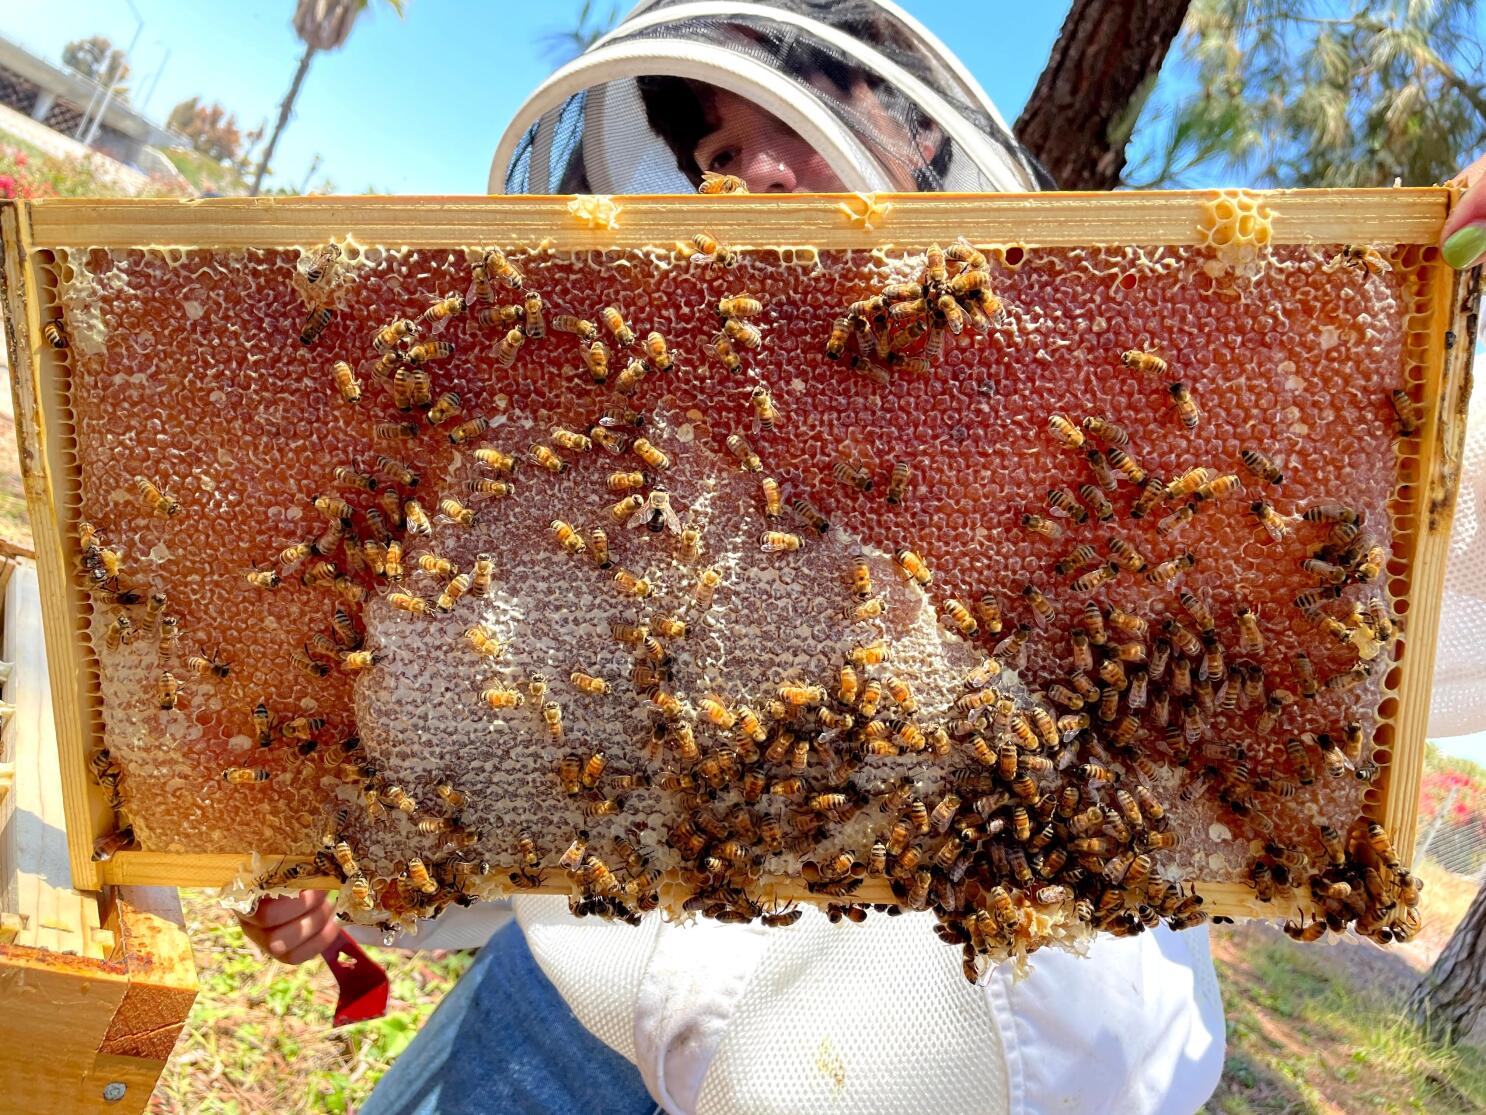 Mexican beekeepers vs. Monsanto - Honey Bee Haven